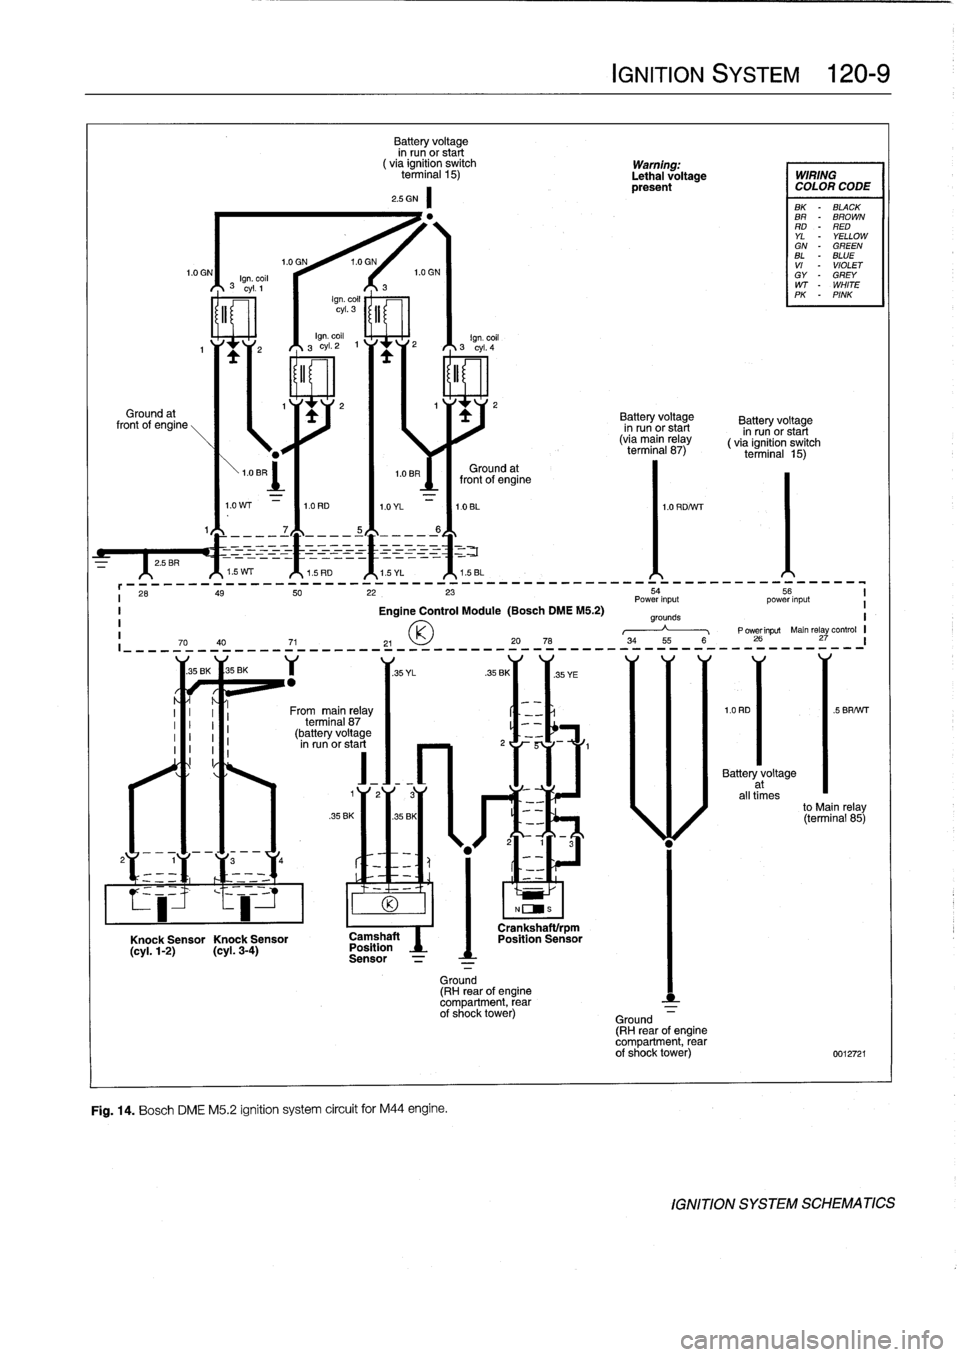 BMW 328i 1994 E36 Workshop Manual 
^1
.5WT
^1
.5RD
^1
.5YL
^1
.5BL
r

	

--__

	

____-

	

__-_

	

___-_

	

-___-_____--__--

	

-____-___

	

____-
i
26
g
5022
23

	

54

	

5

I

	

Power
input

	

power
input
I

	

Engine
Contro